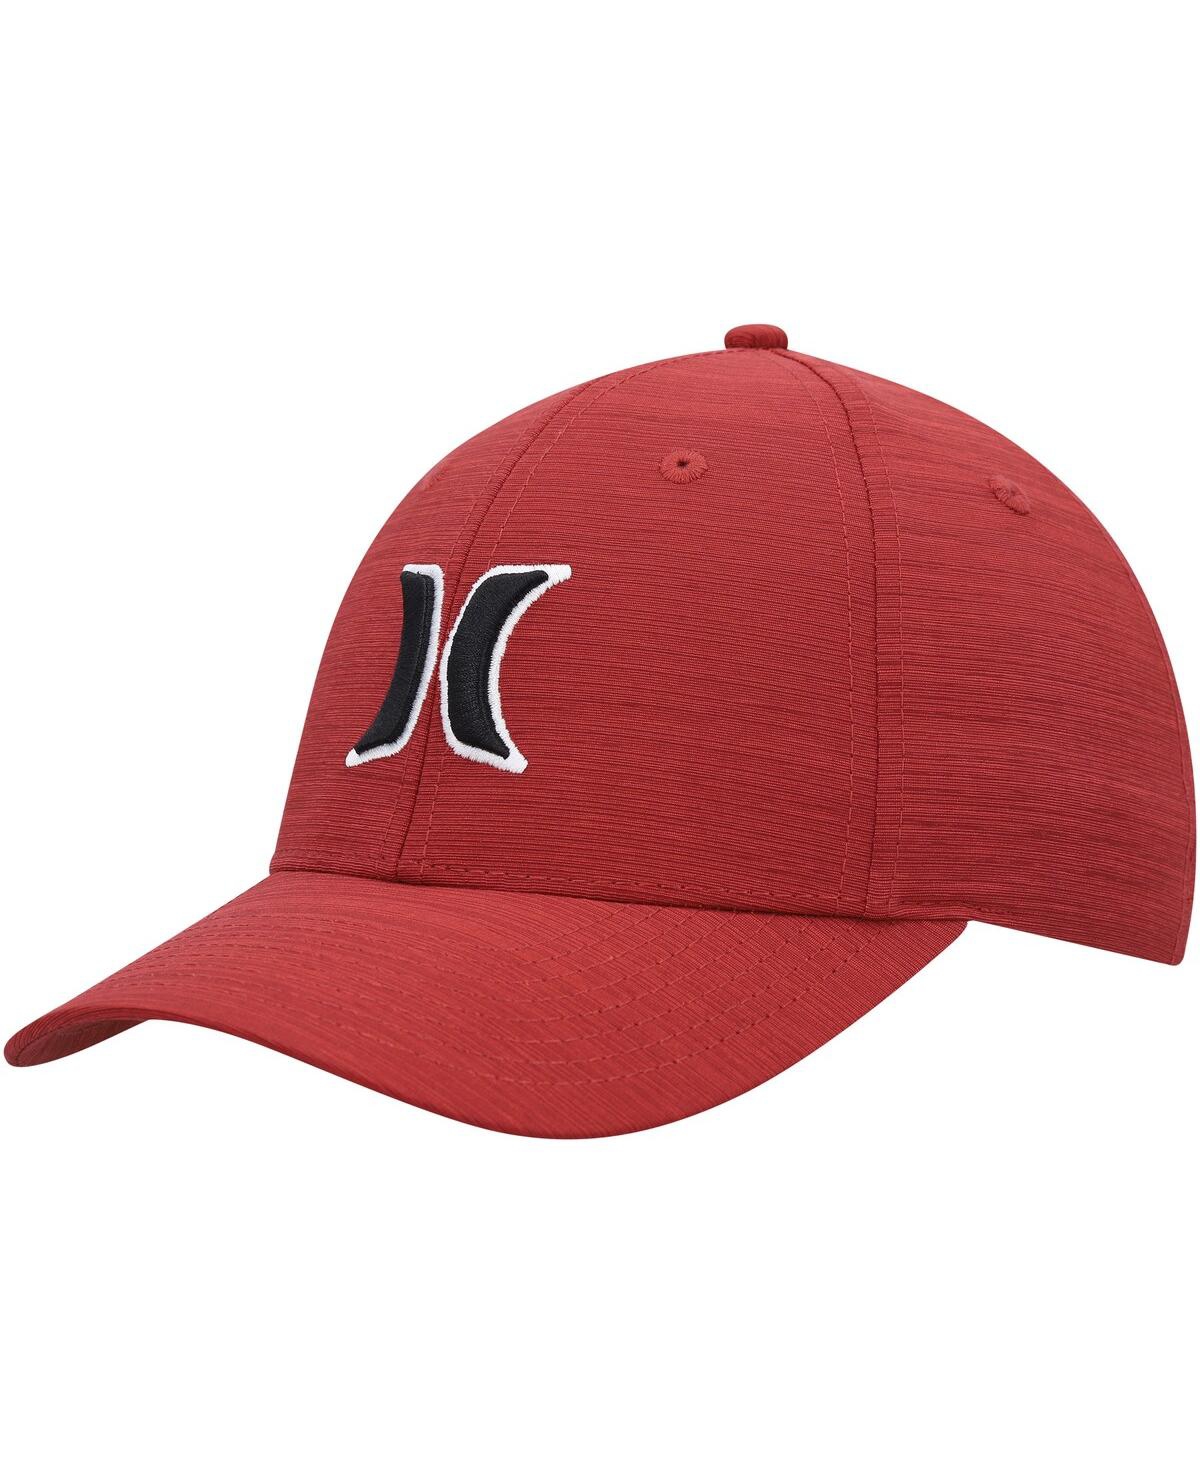 Men's Hurley Red Max H20-Dri Flex Hat - Red